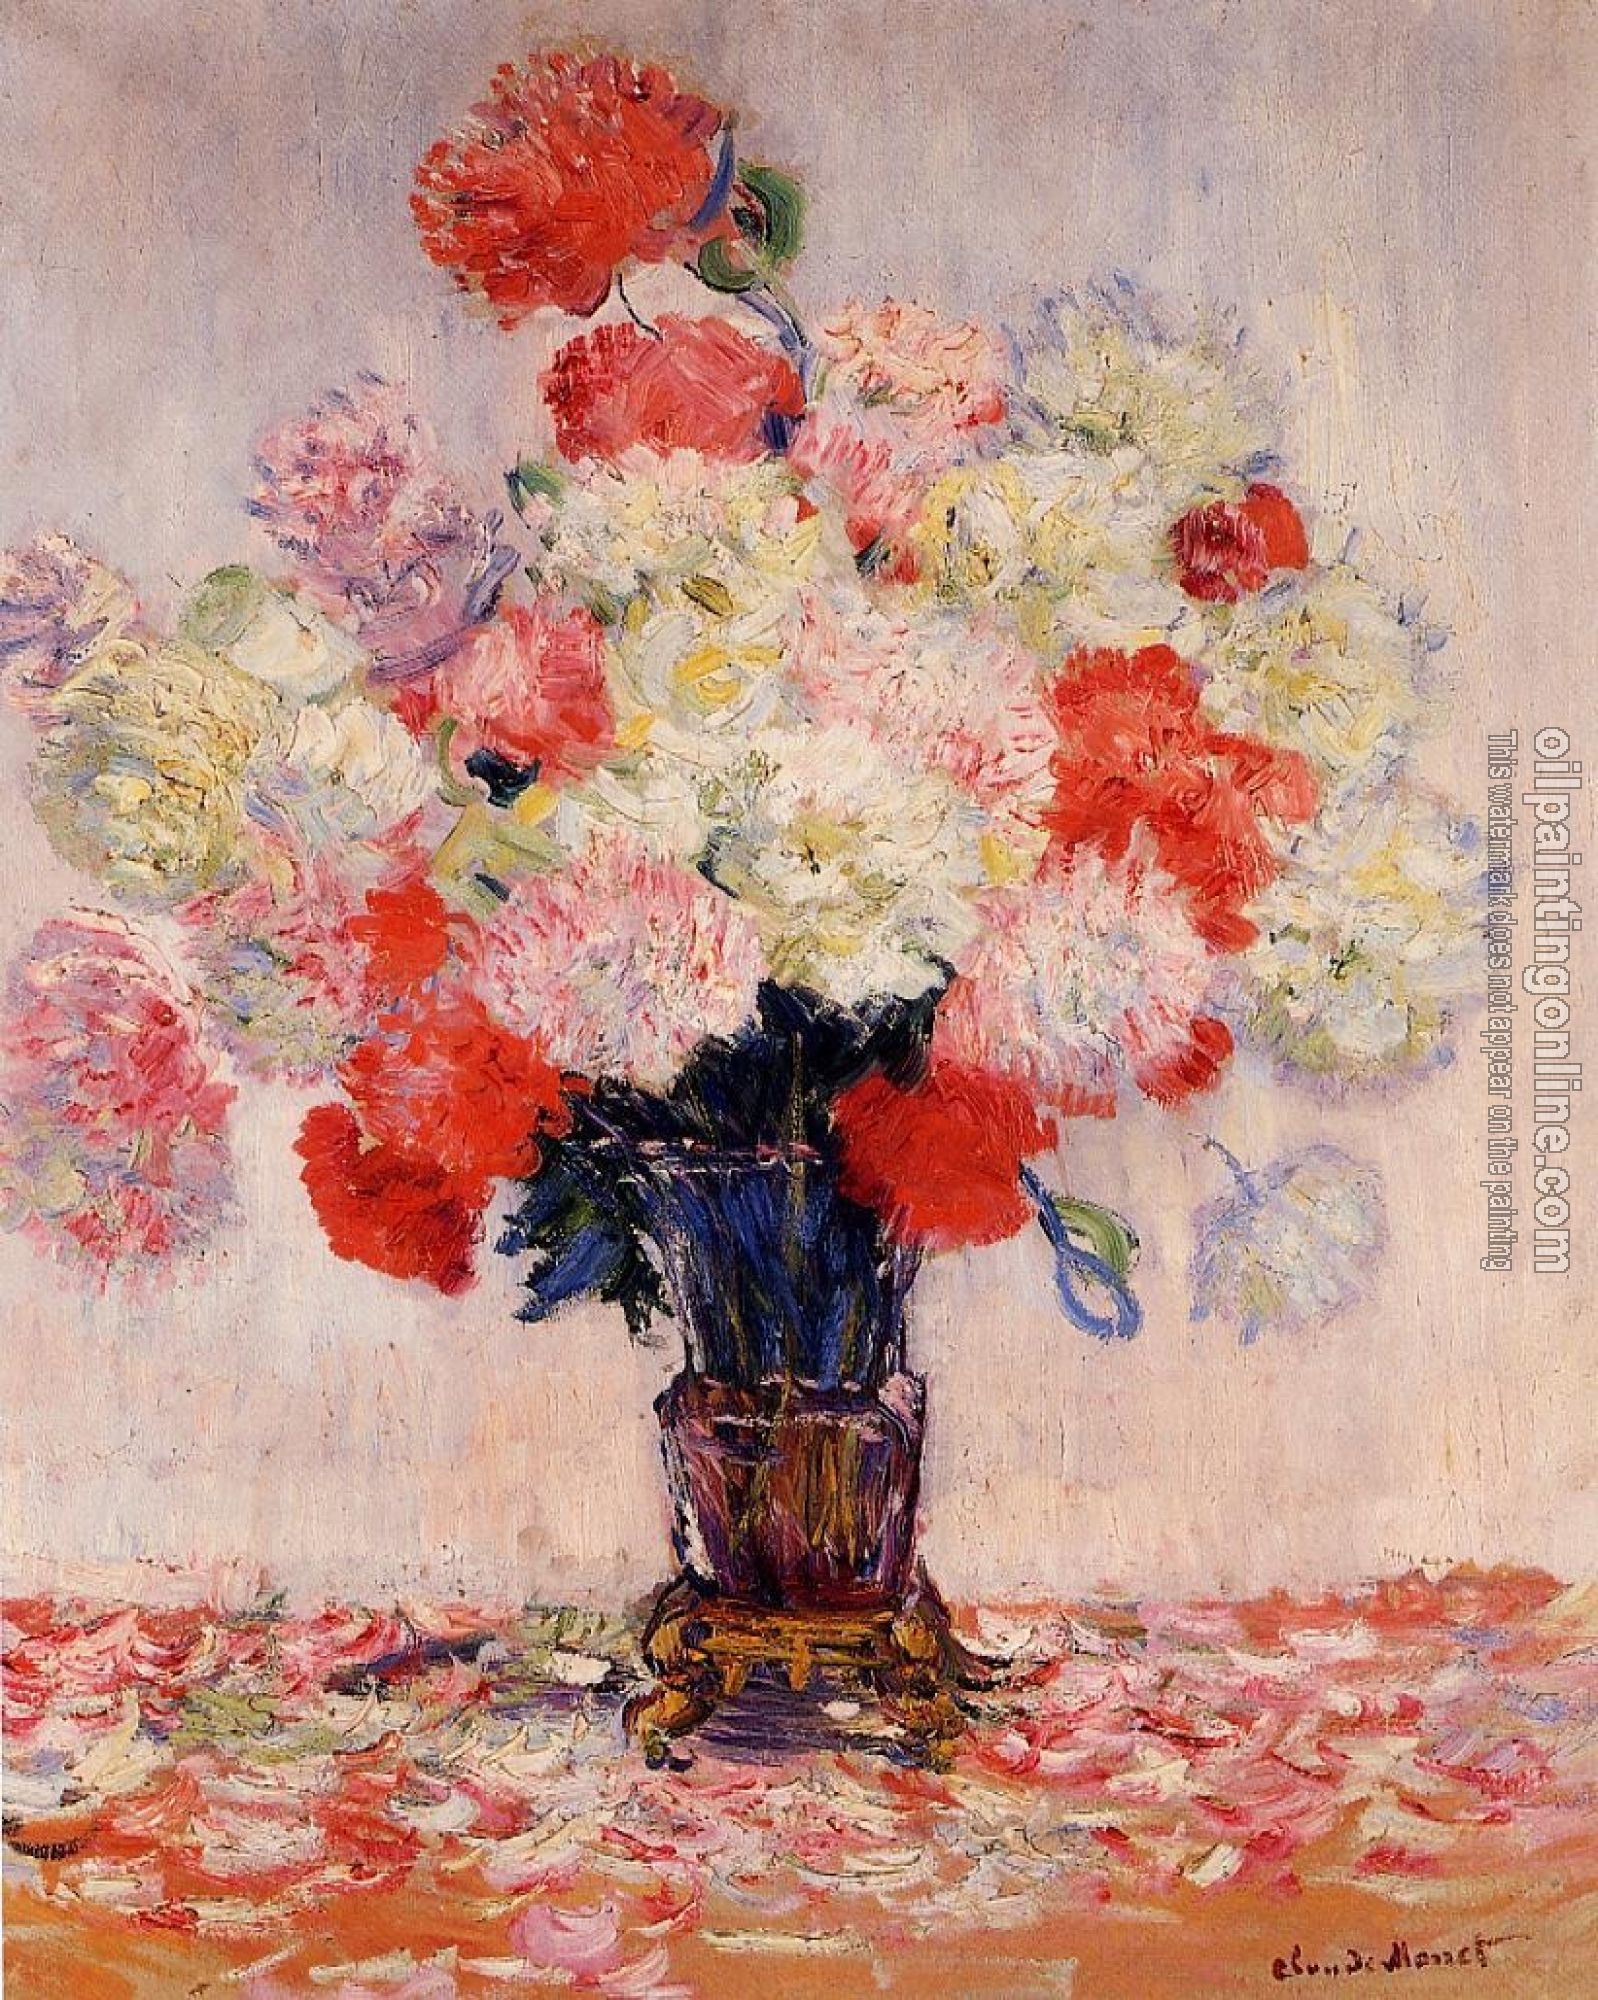 Monet, Claude Oscar - Vase of Peonies